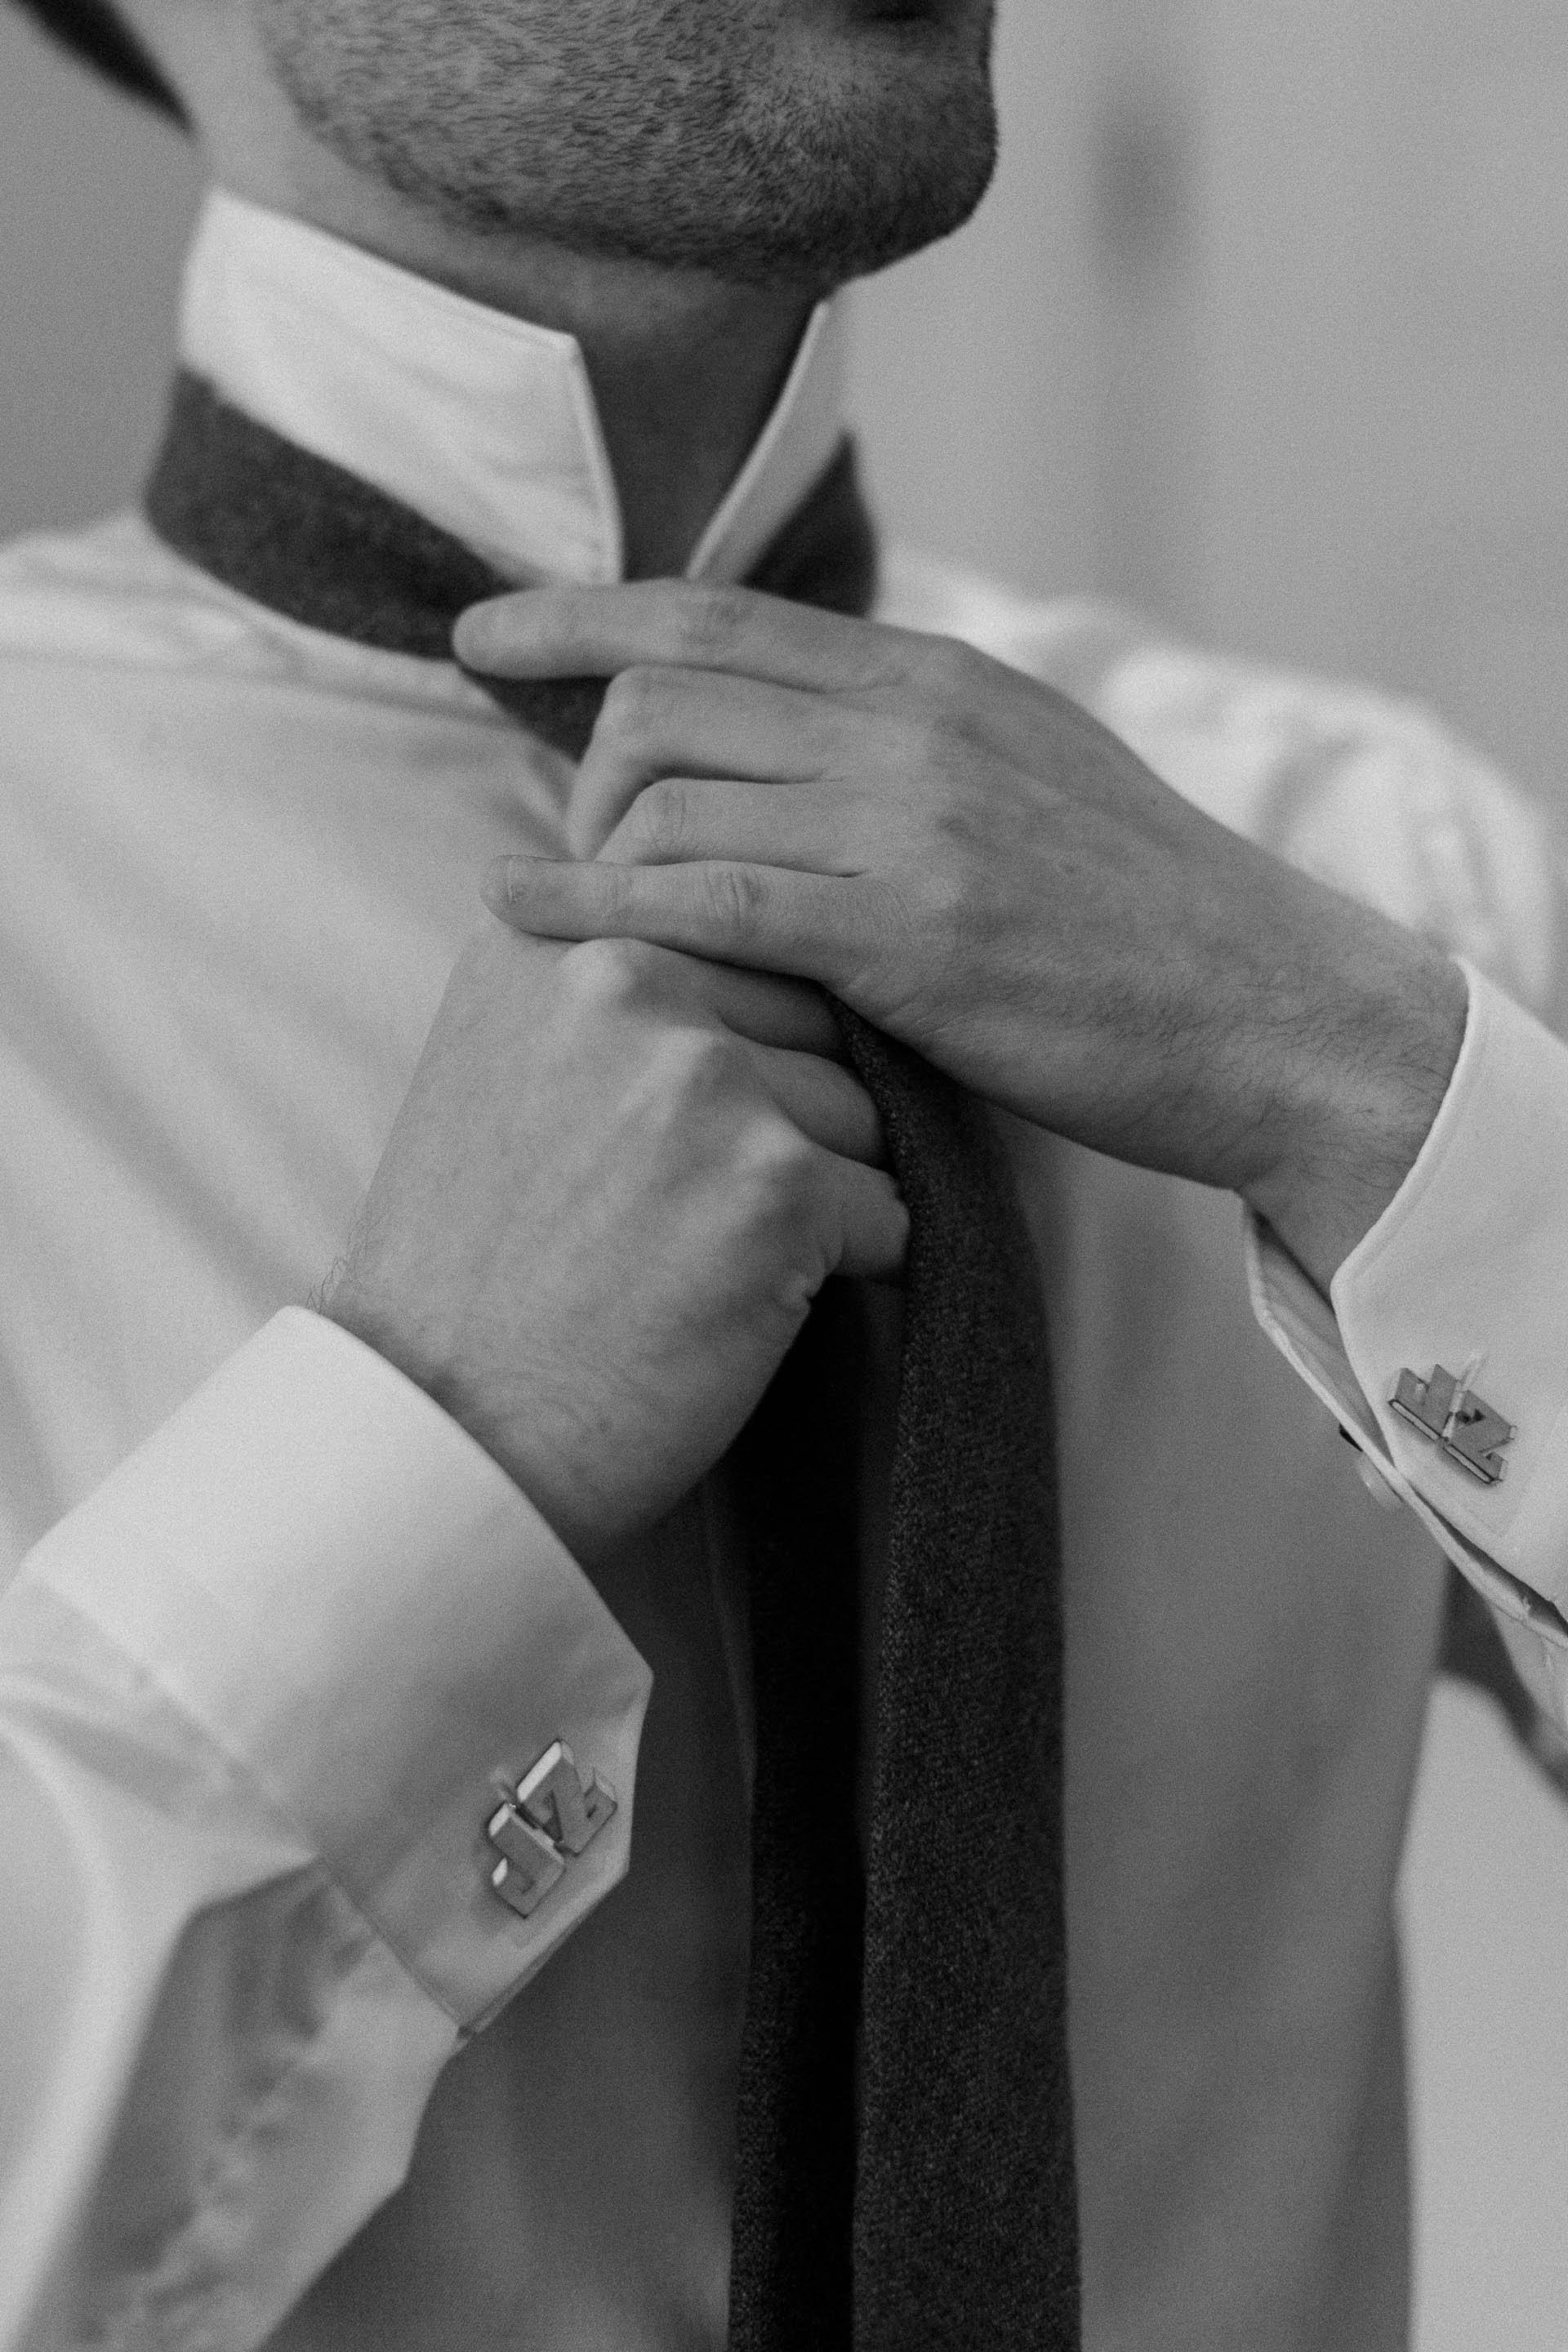 groom putting on tie at wedding